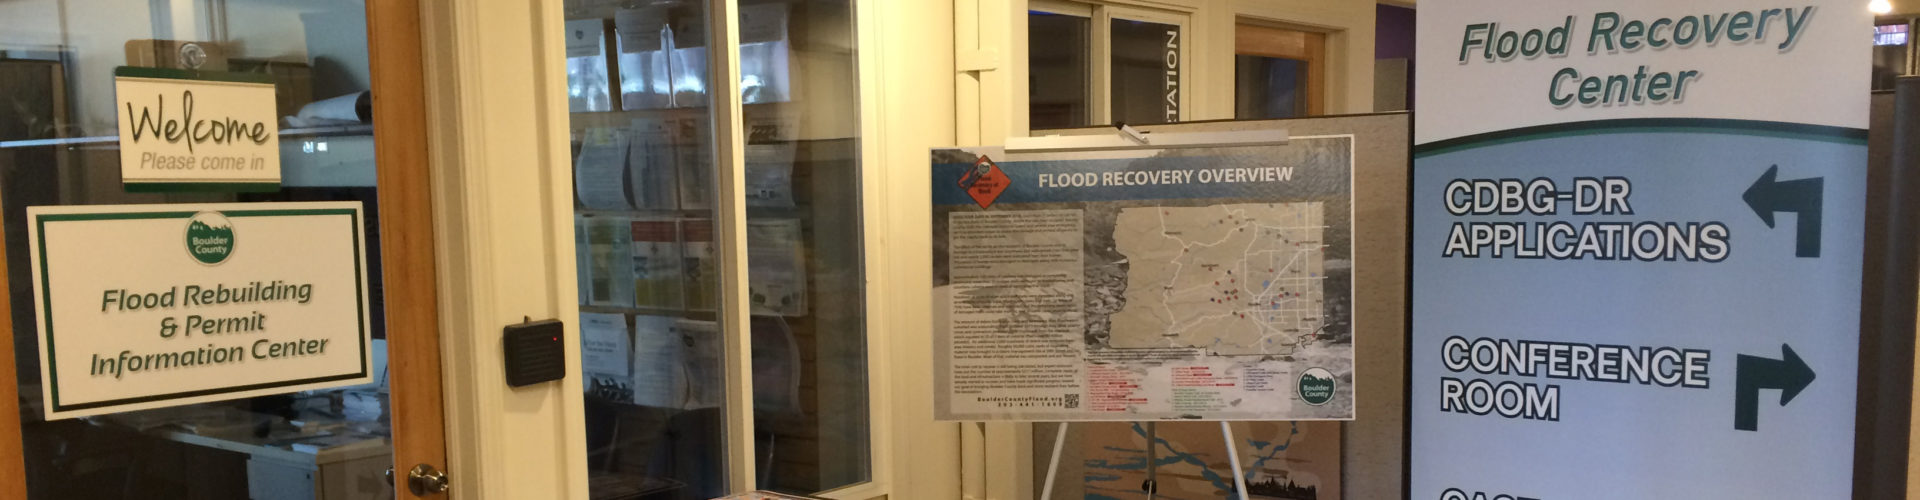 Flood Rebuilding and Permit Information Center banner